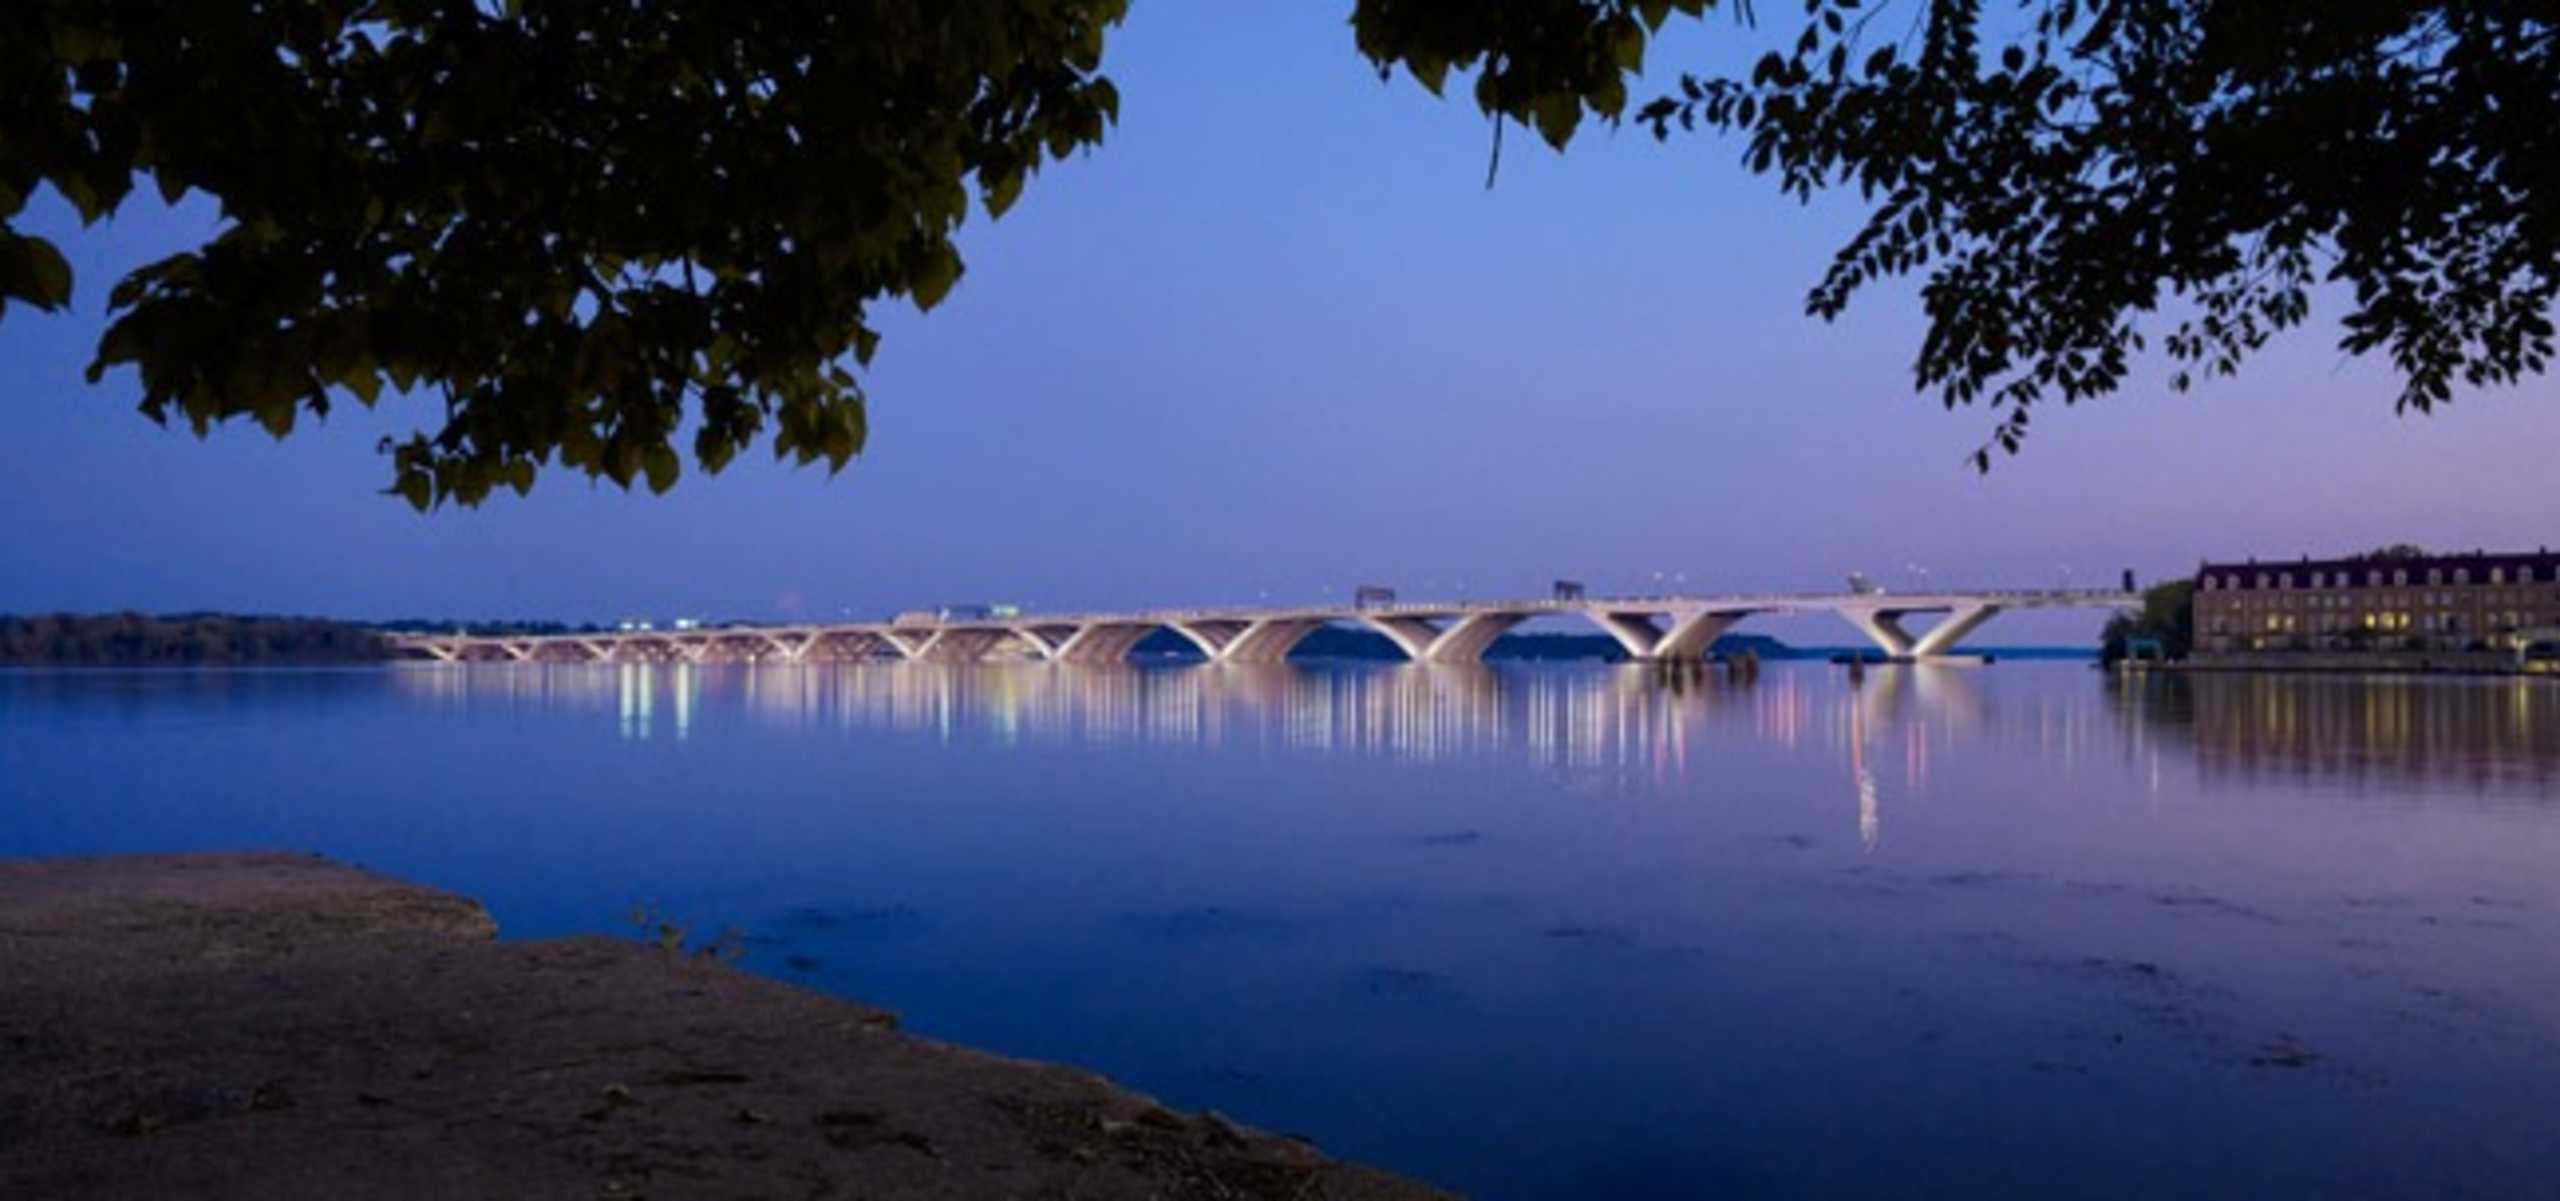 Discover Life Along The Potomac River in Alexandria and Arlington